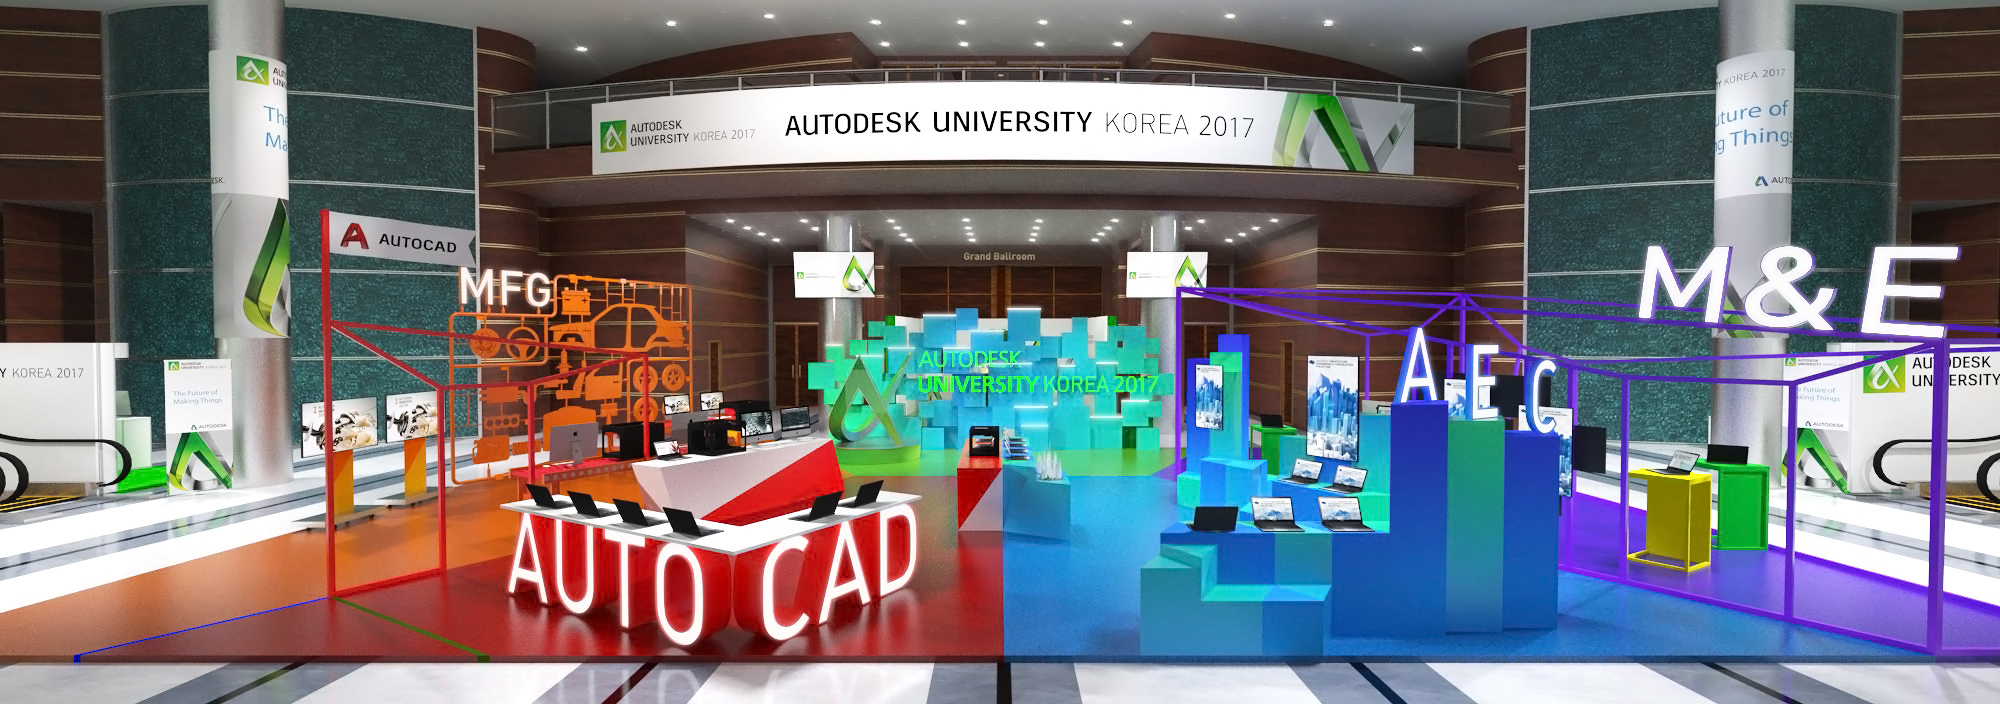 Autodesk University_EX _Rendering_11